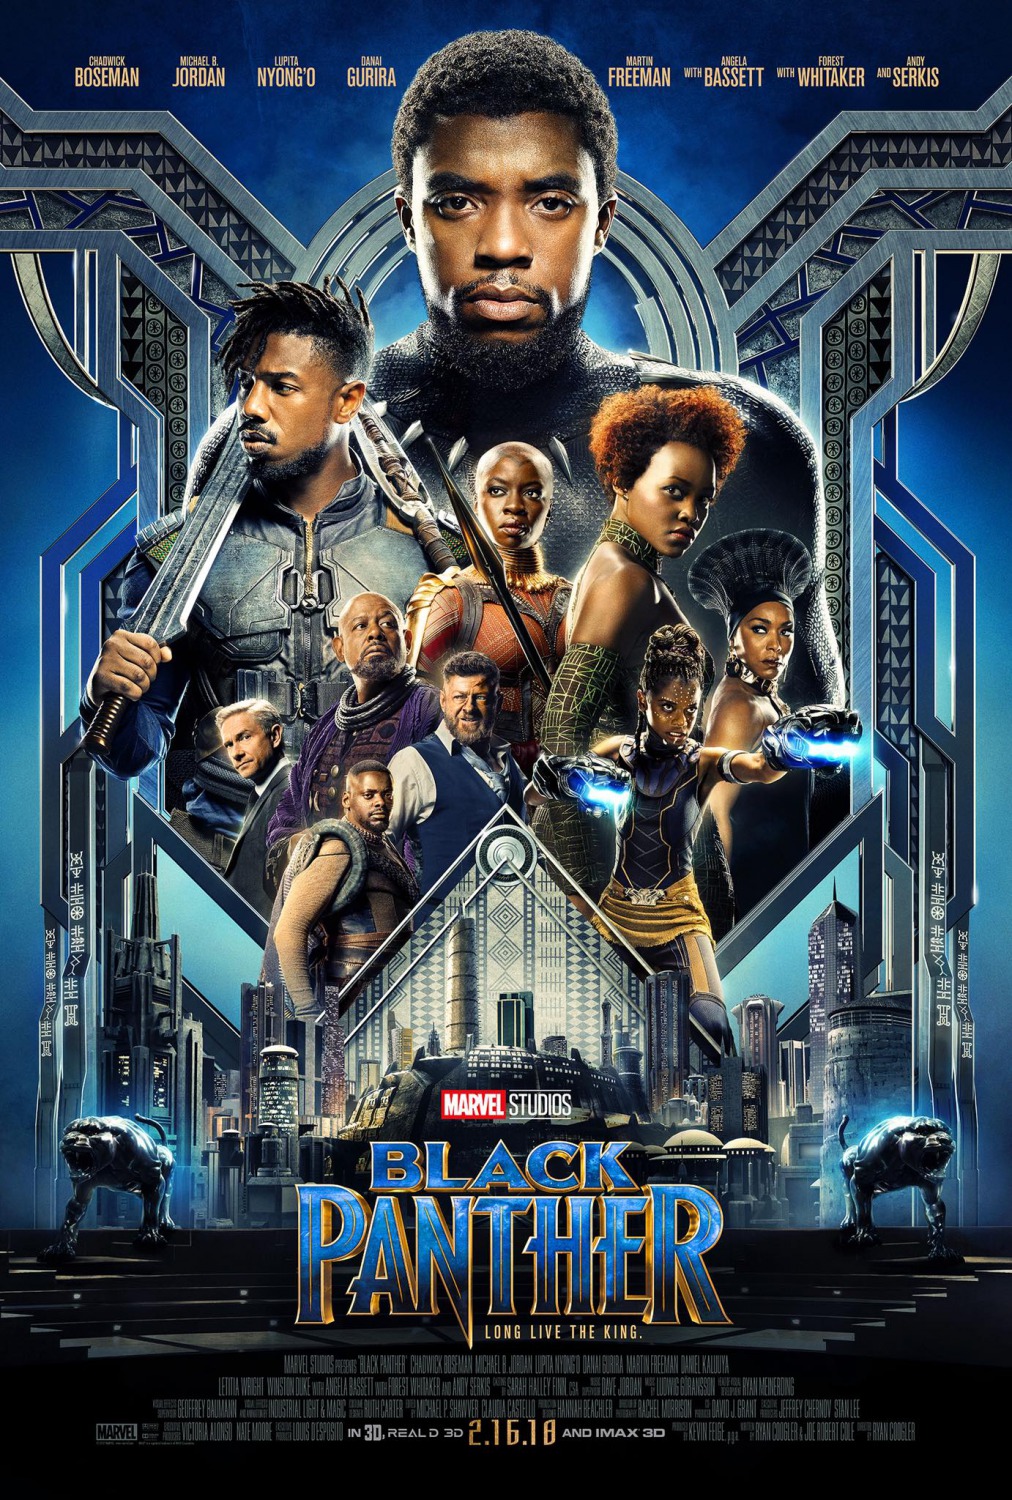 Black Panther poster featuring T'Challa, Killmonger, Nakia, Okoye, Shuri, Ramonda, Klaue, W'Kabi, Zuri, and Ross